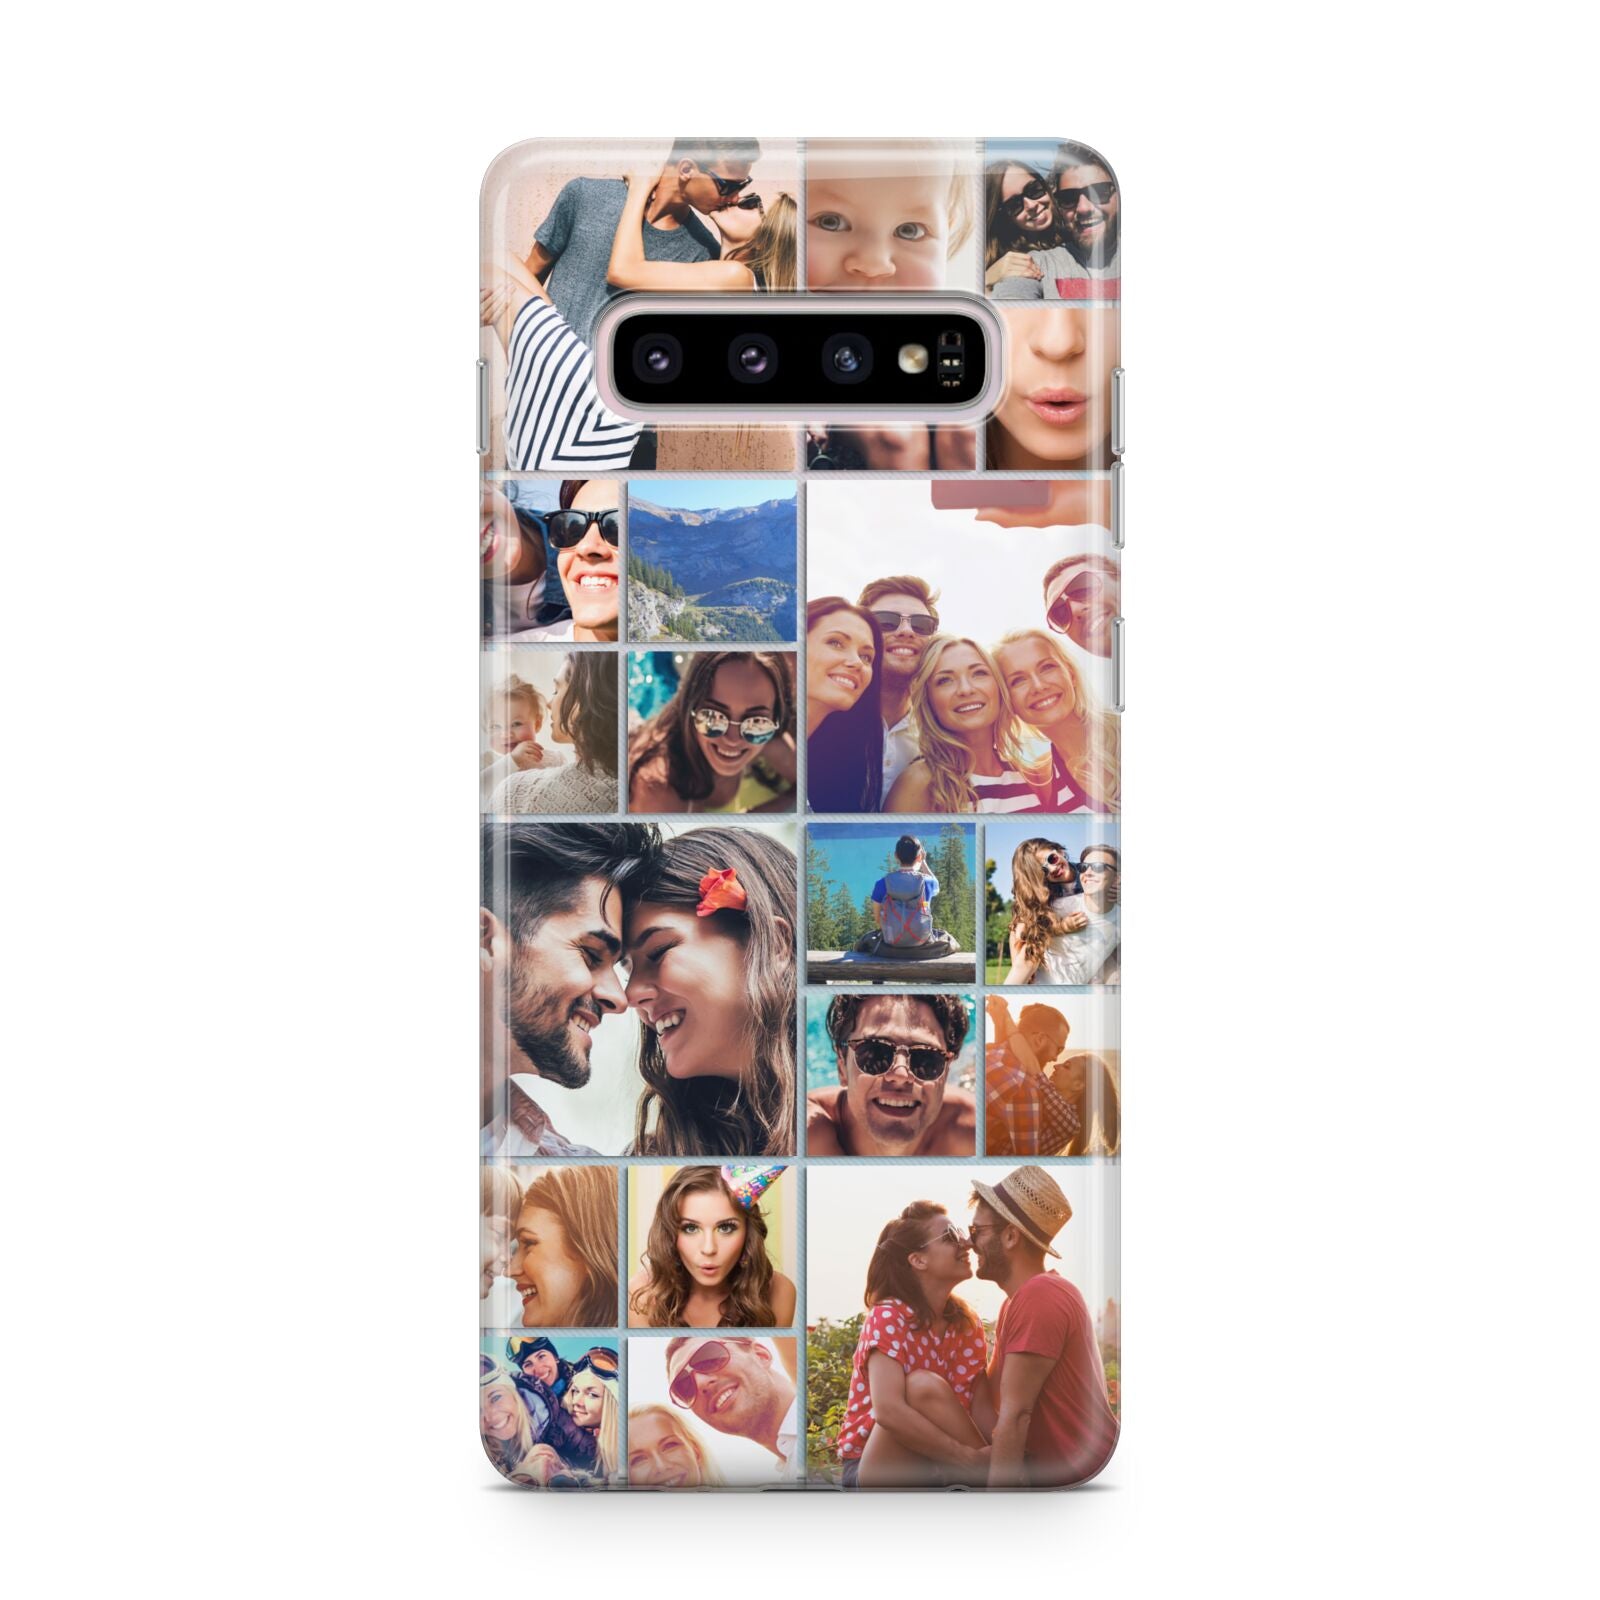 Photo Grid Samsung Galaxy S10 Plus Case